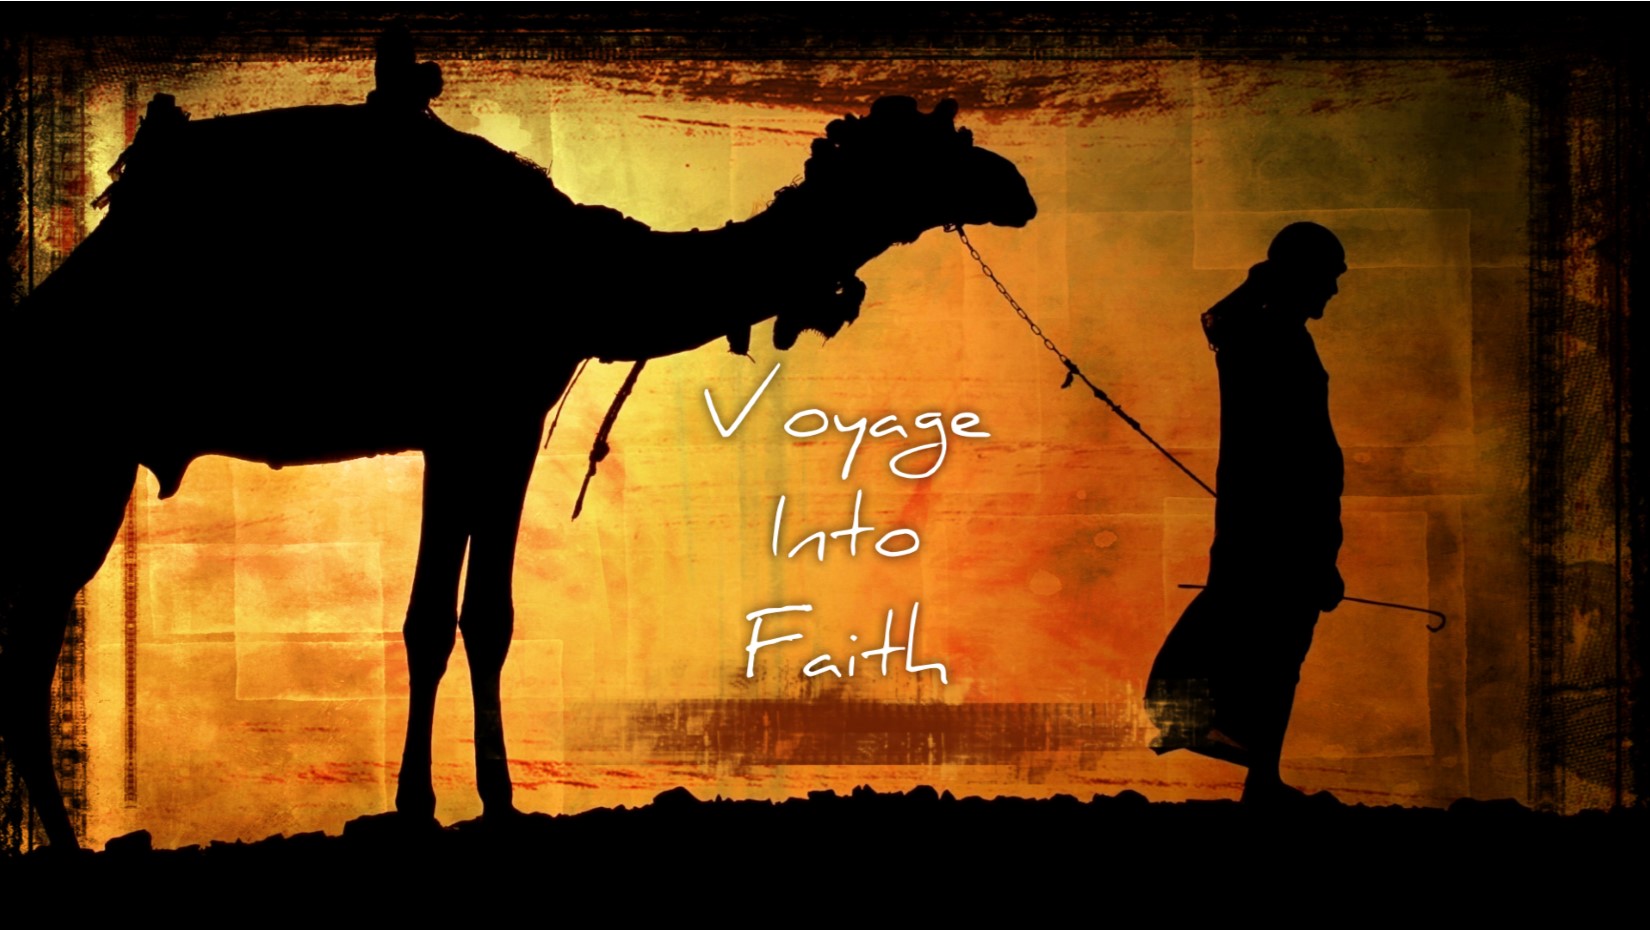 07.19.2020 Voyage Into Faith